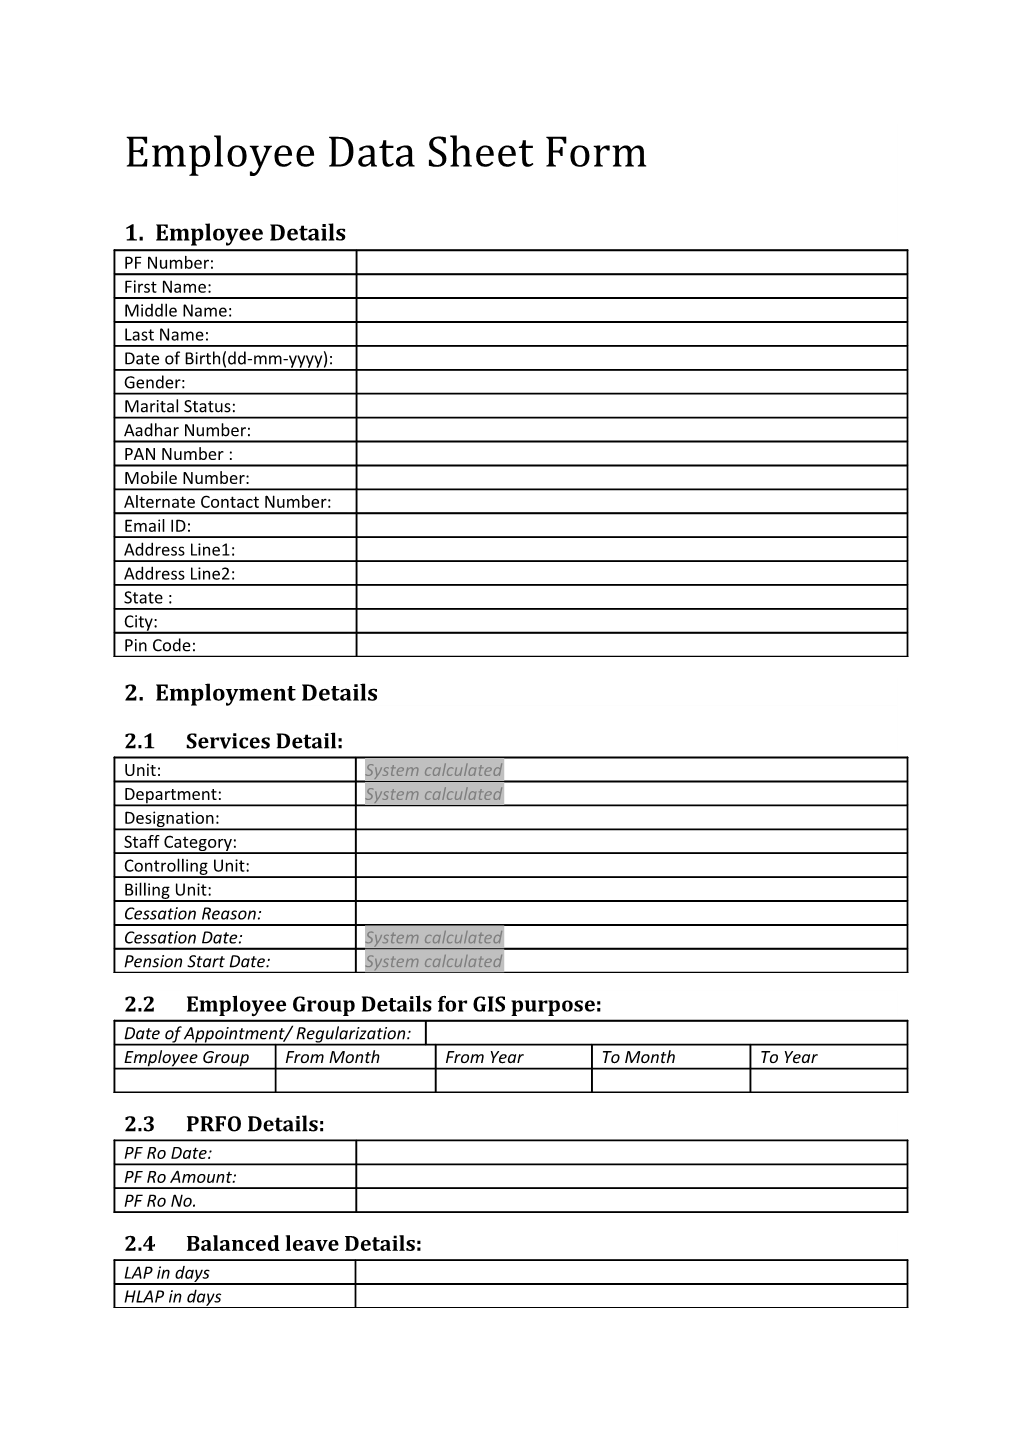 Employee Data Sheet Form